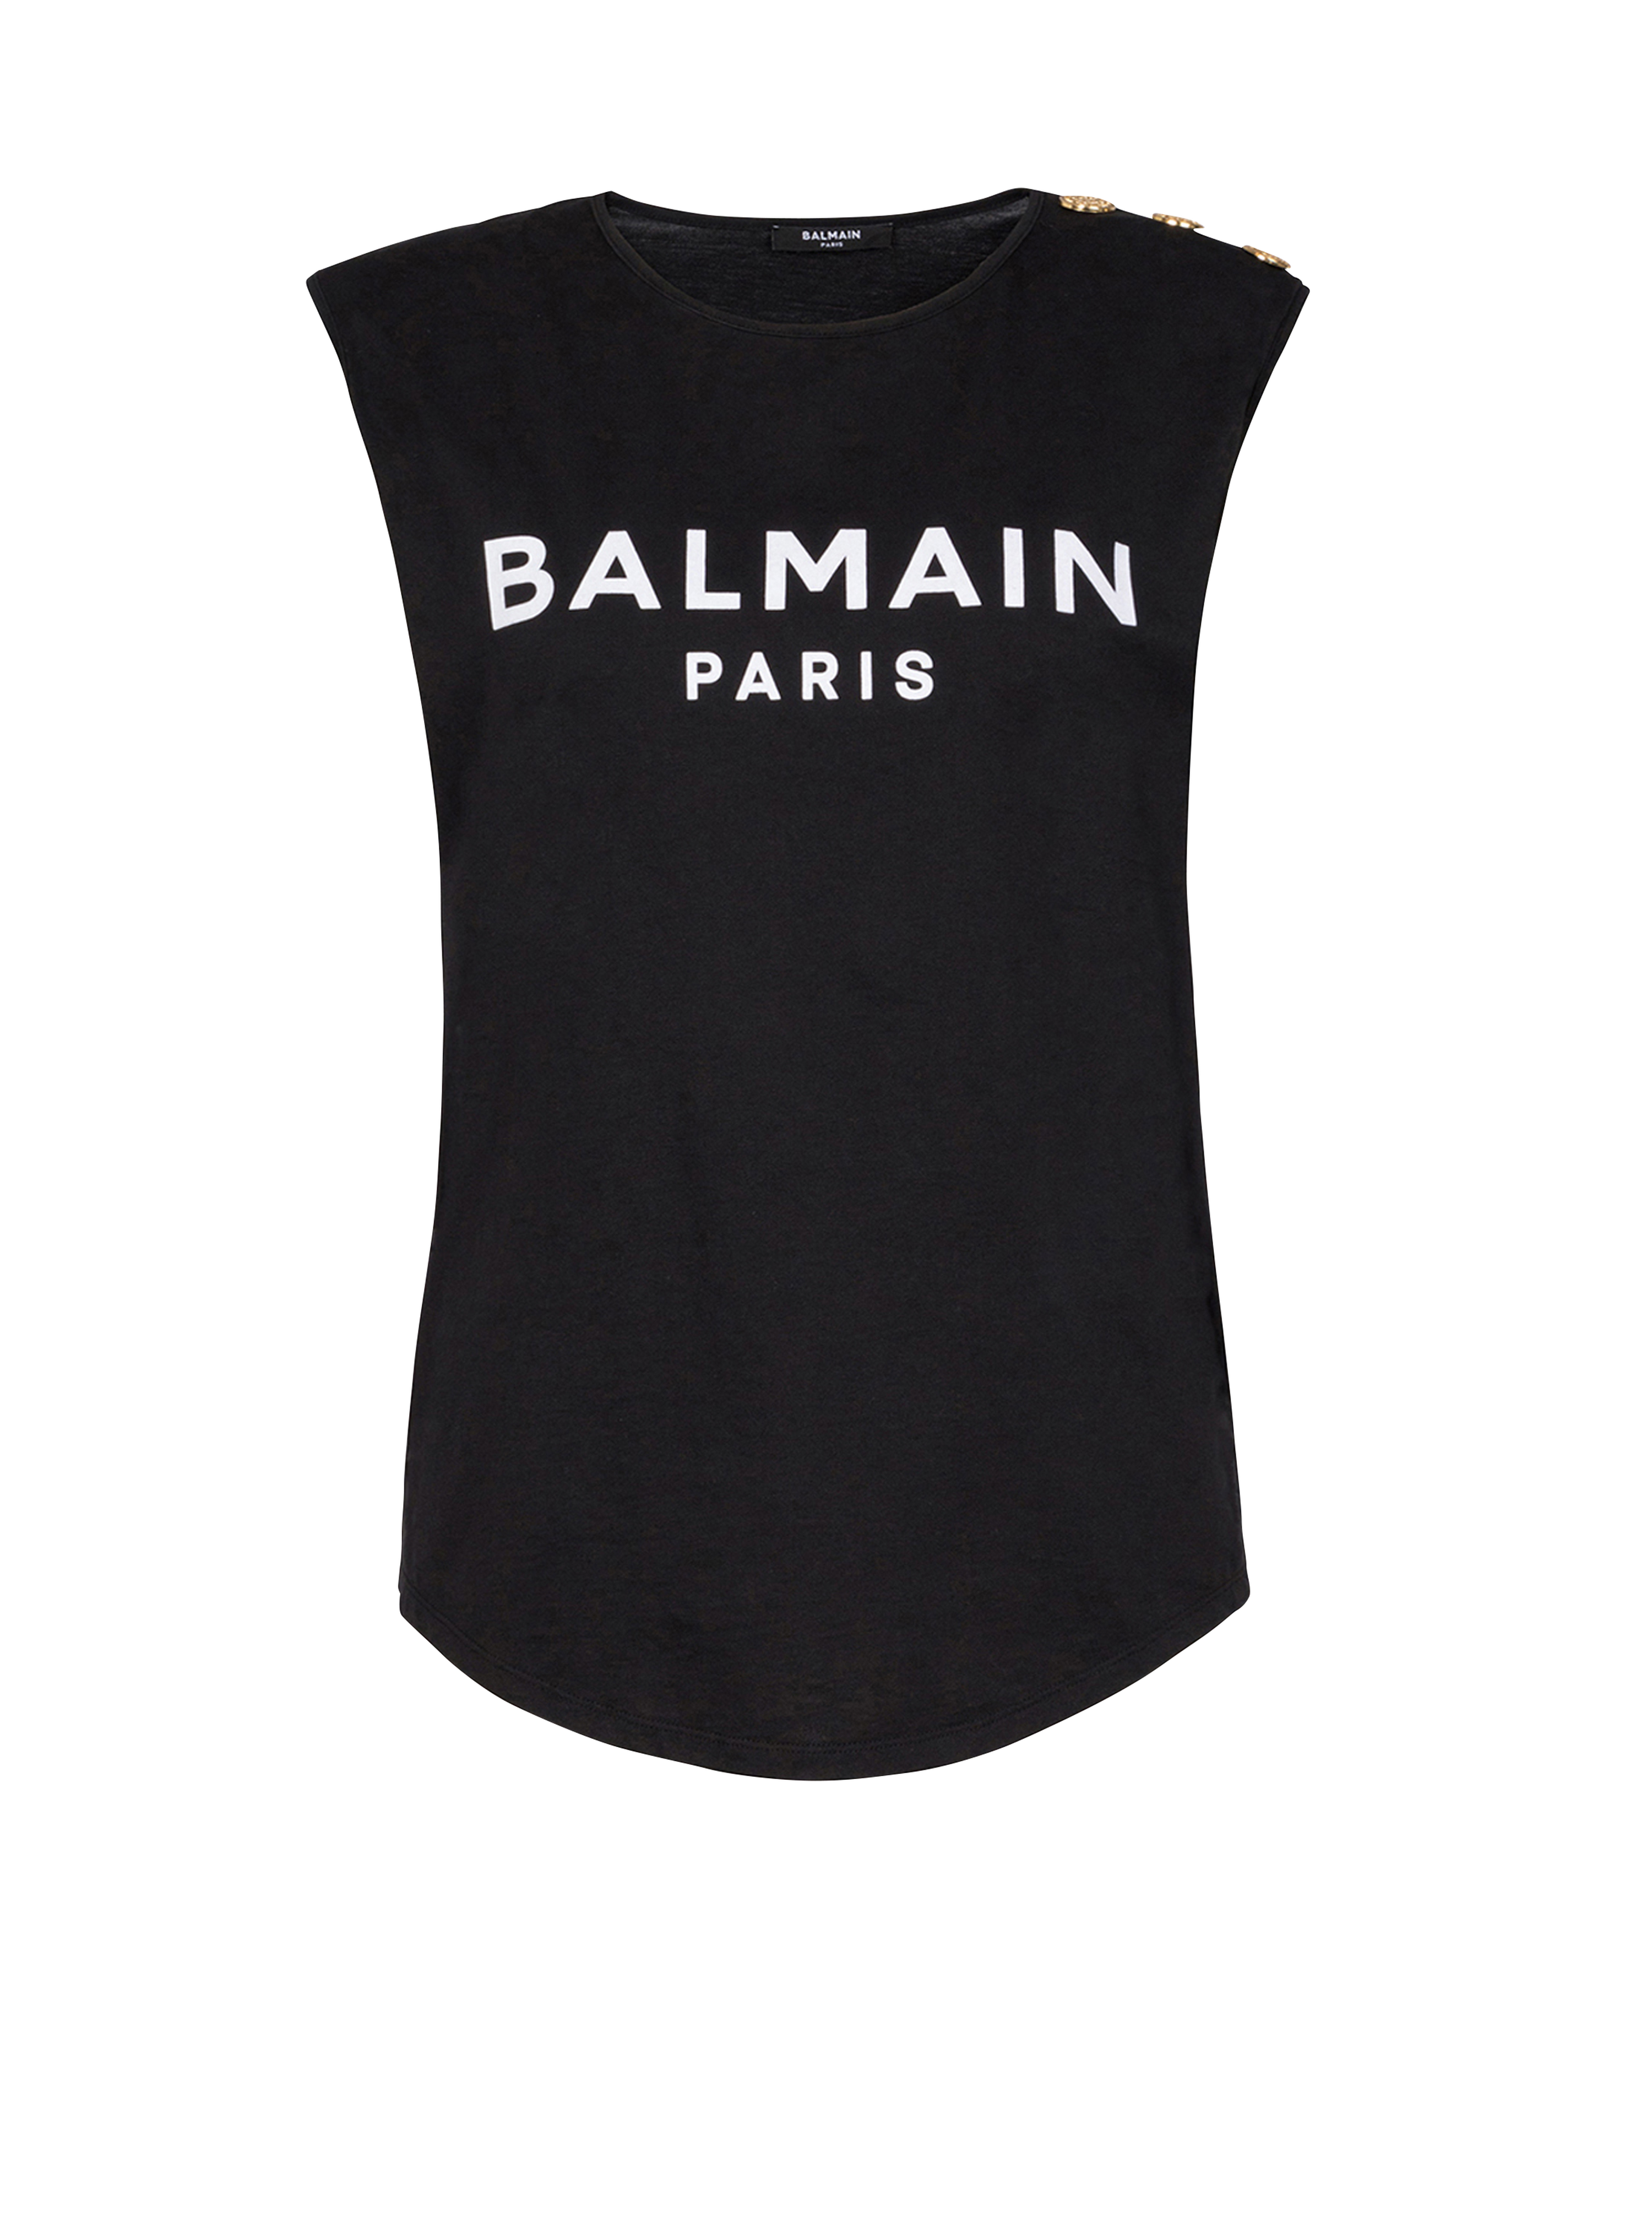 Camiseta de algodón con logotipo de Balmain estampado, negro